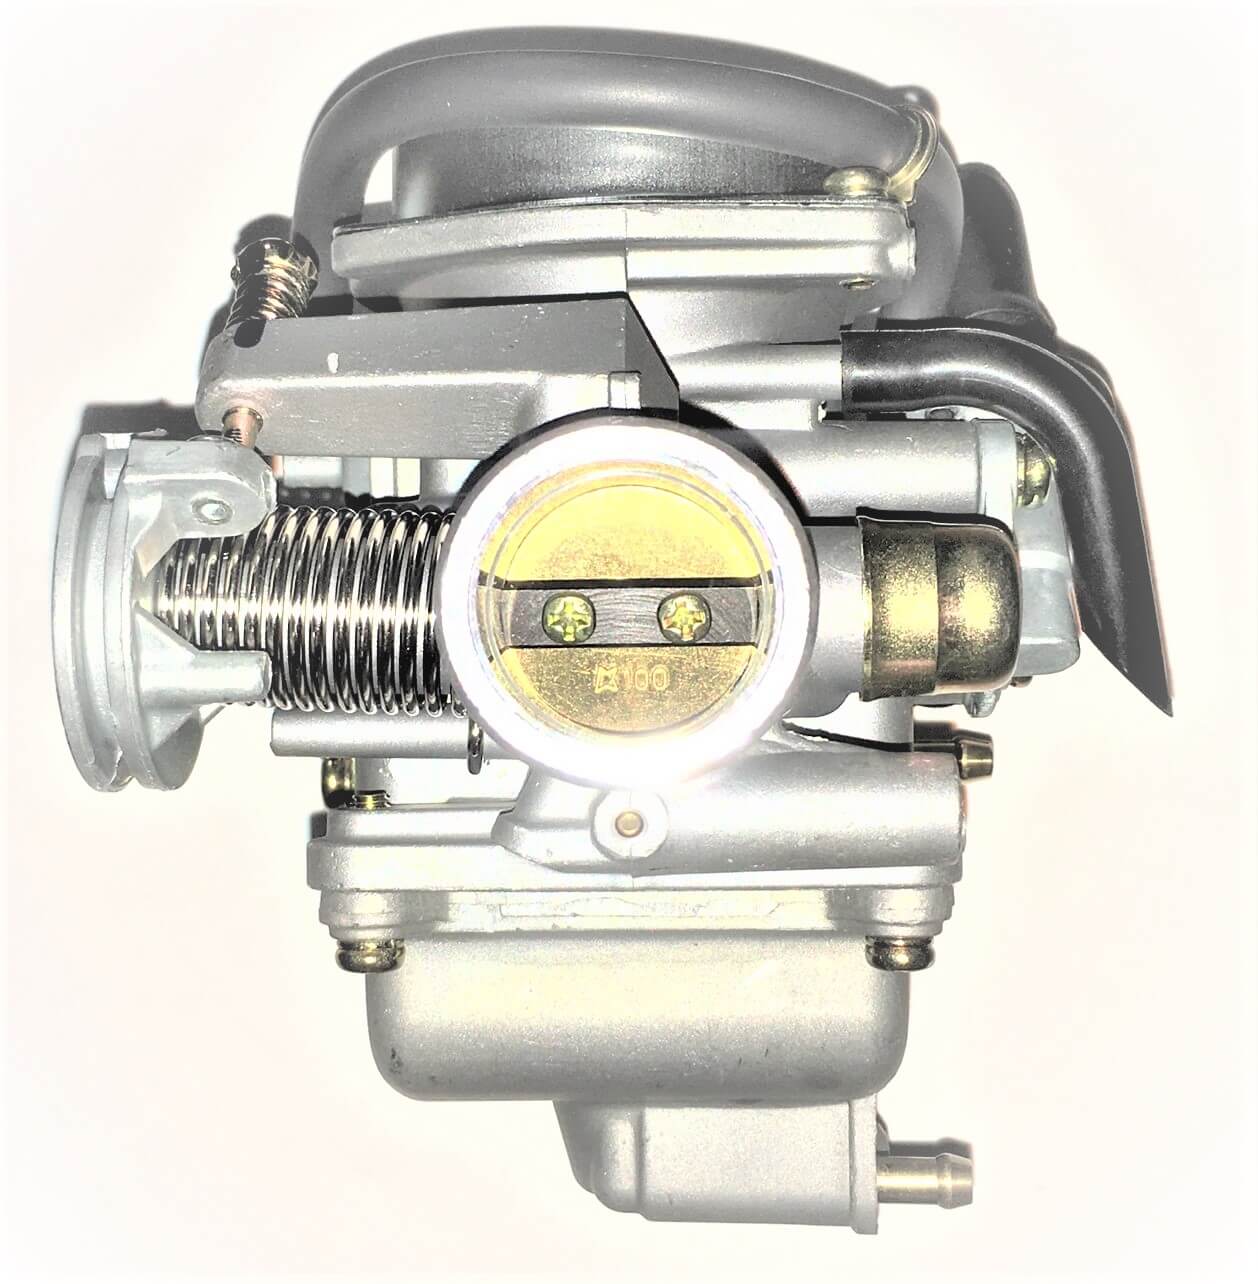 Kei Hin Style Carburetor Manual Choke 150-250cc Fits E-Ton Yukon YXL150, CXL150, Viper RXL150R ATVs & Beamer R4-150, Matrix 150 Scooters + Others Intake OD=32mm, Air Box OD=42mm